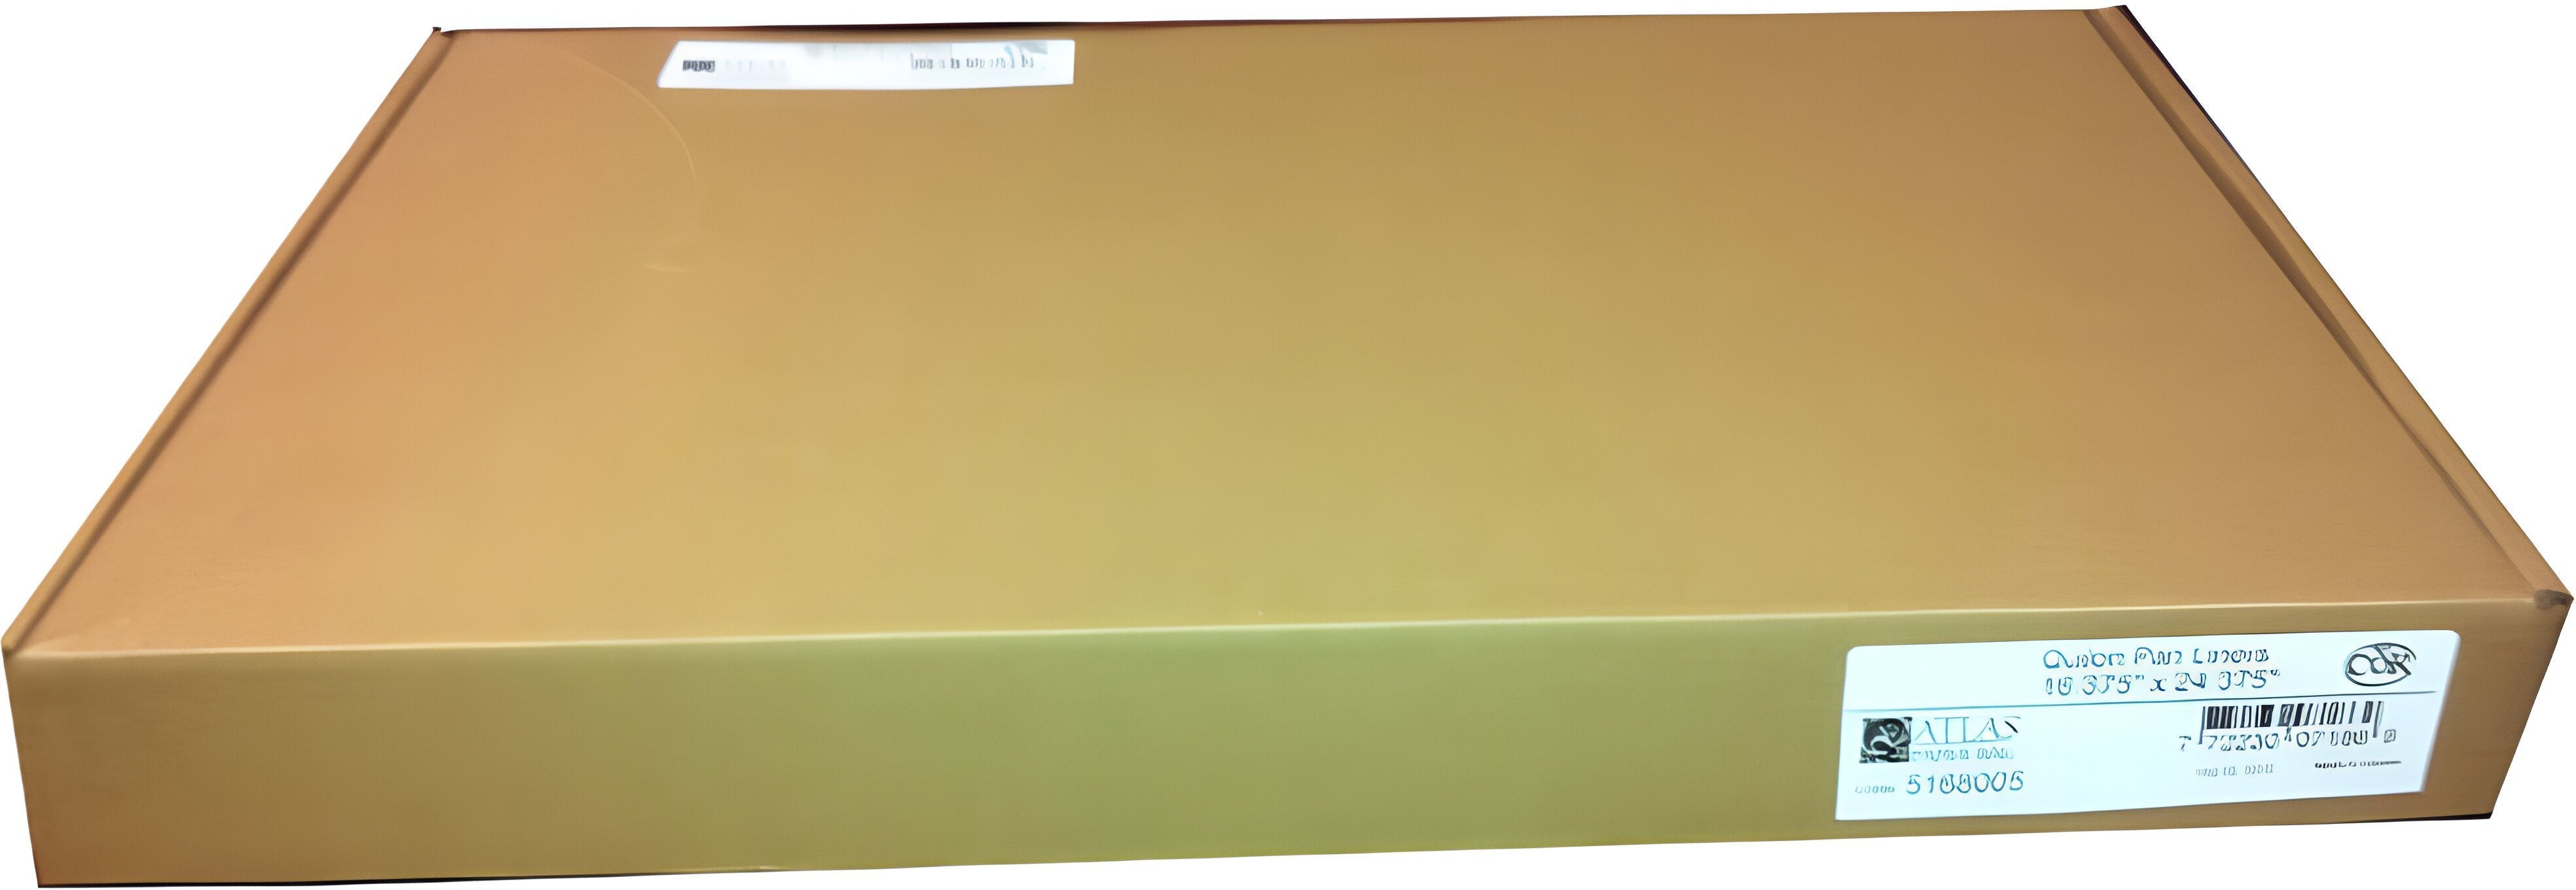 Atlas Paper Bag - 16.4 X 24.4" Quilon Pan Liners, 1000/Cs - 5168005